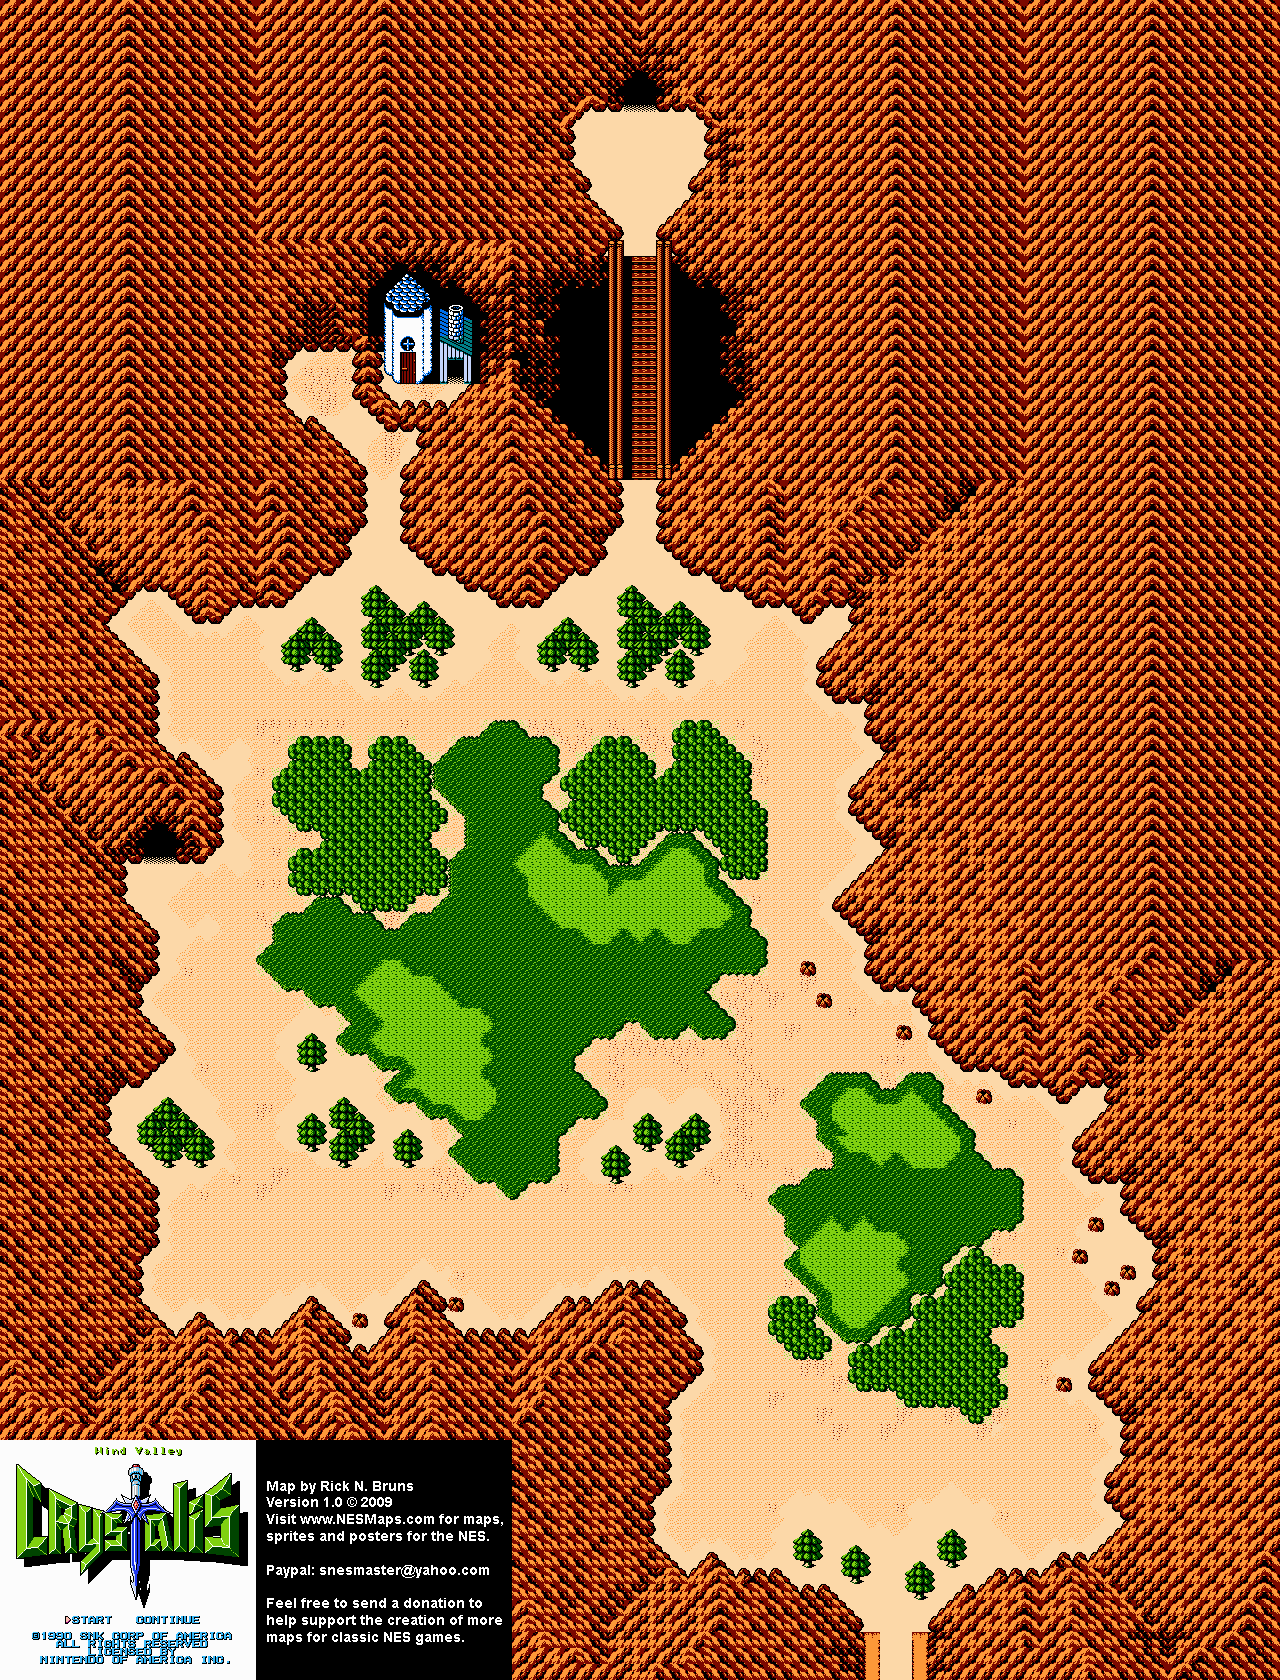 Crystalis - Wind Valley Nintendo NES Map BG